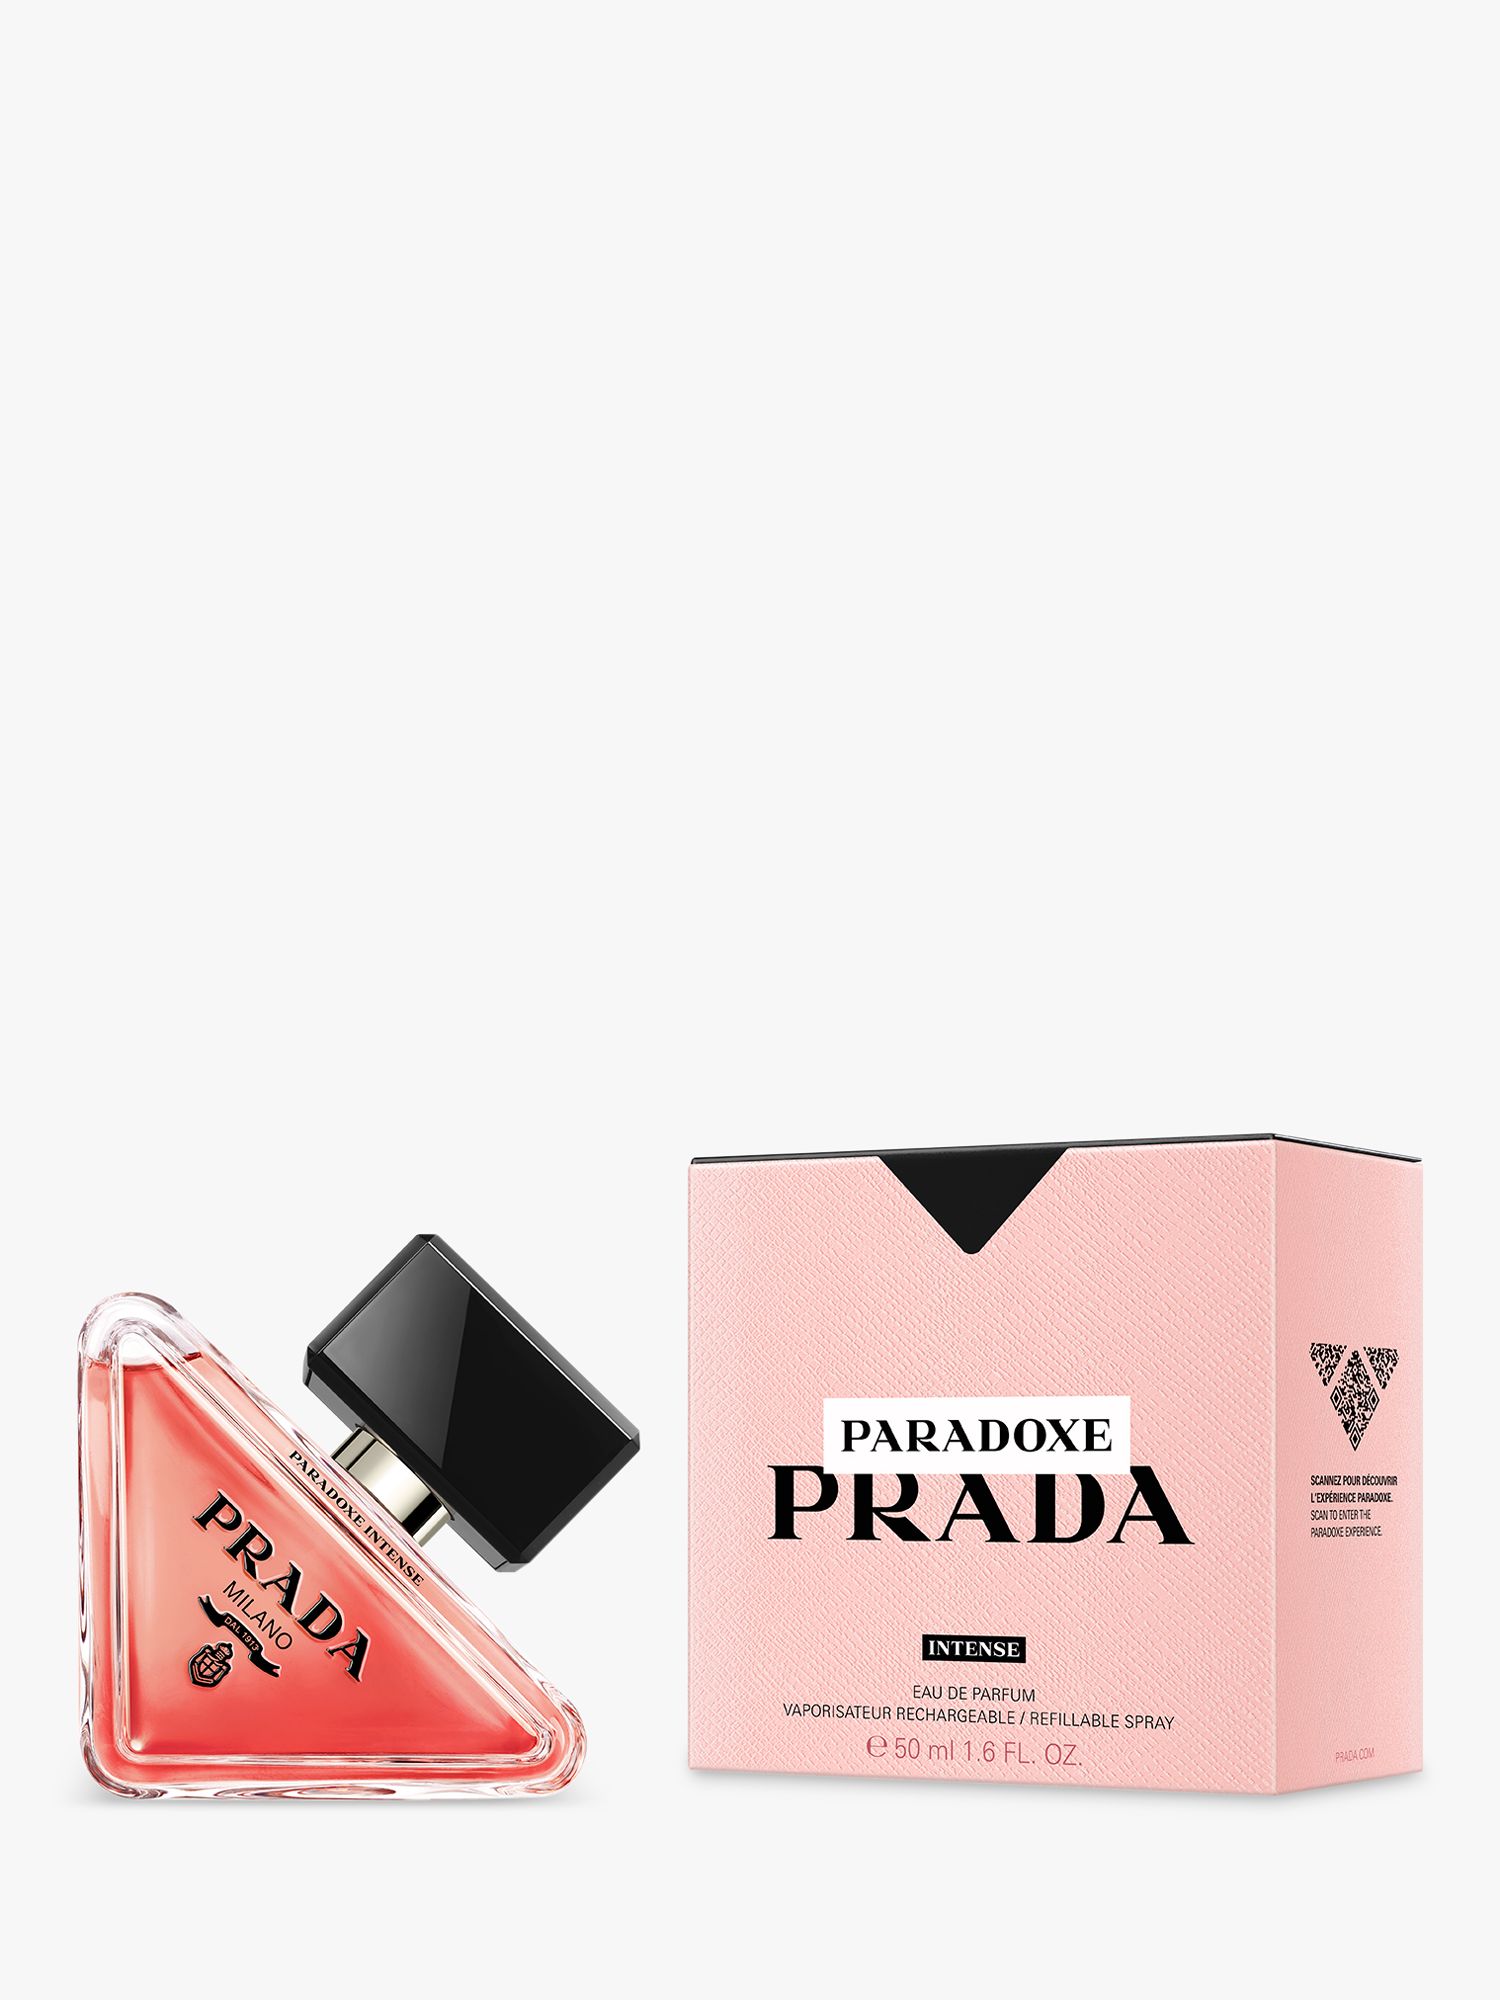 Prada Paradoxe Intense Eau de Parfum, 50 ml 2